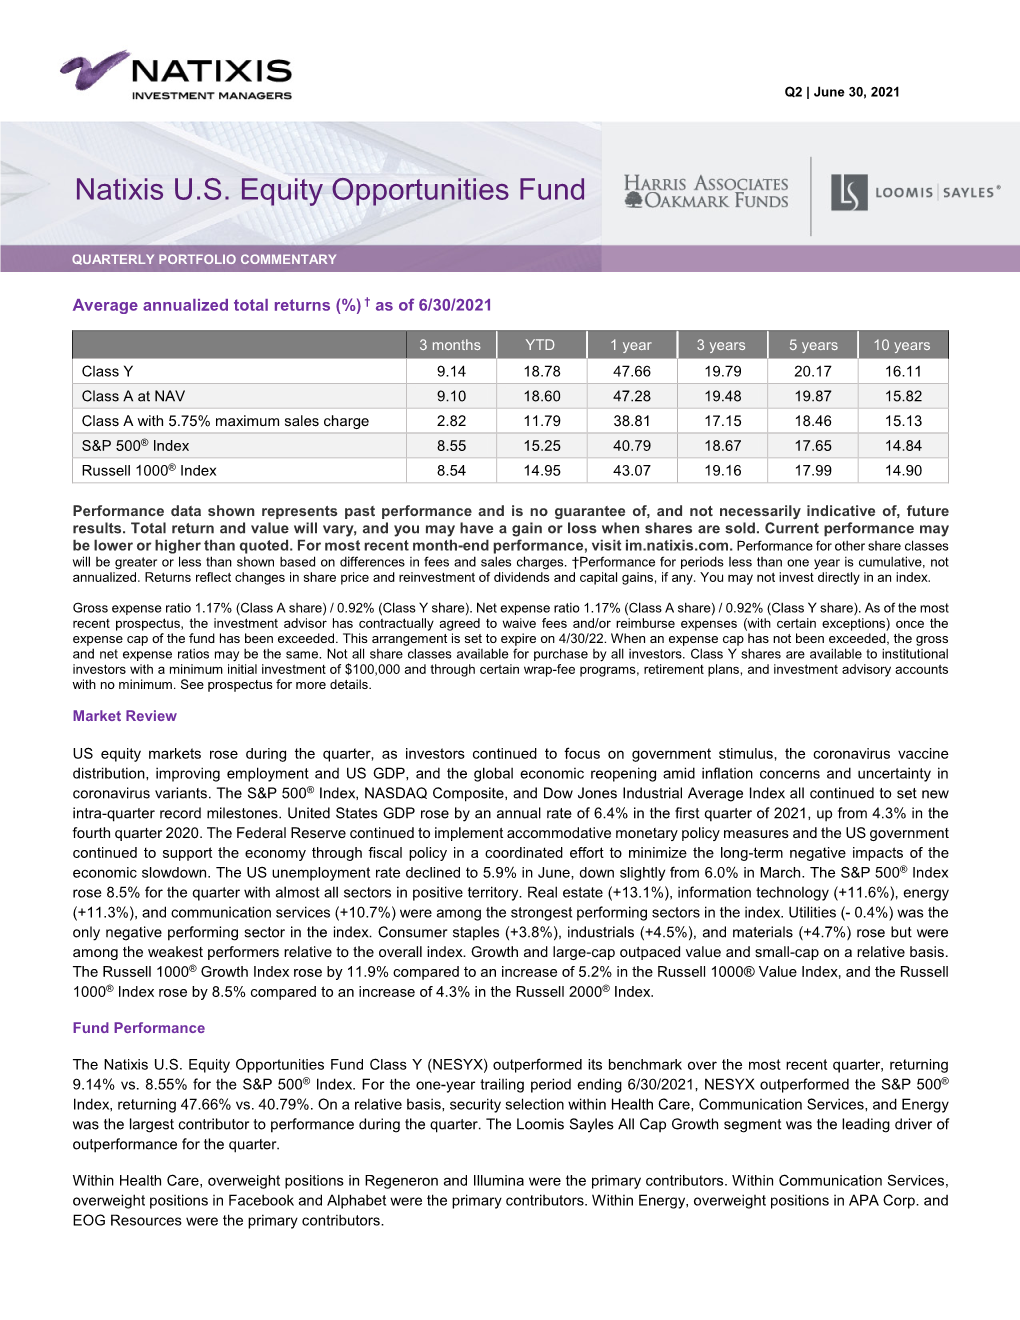 Natixis U.S. Equity Opportunities Fund